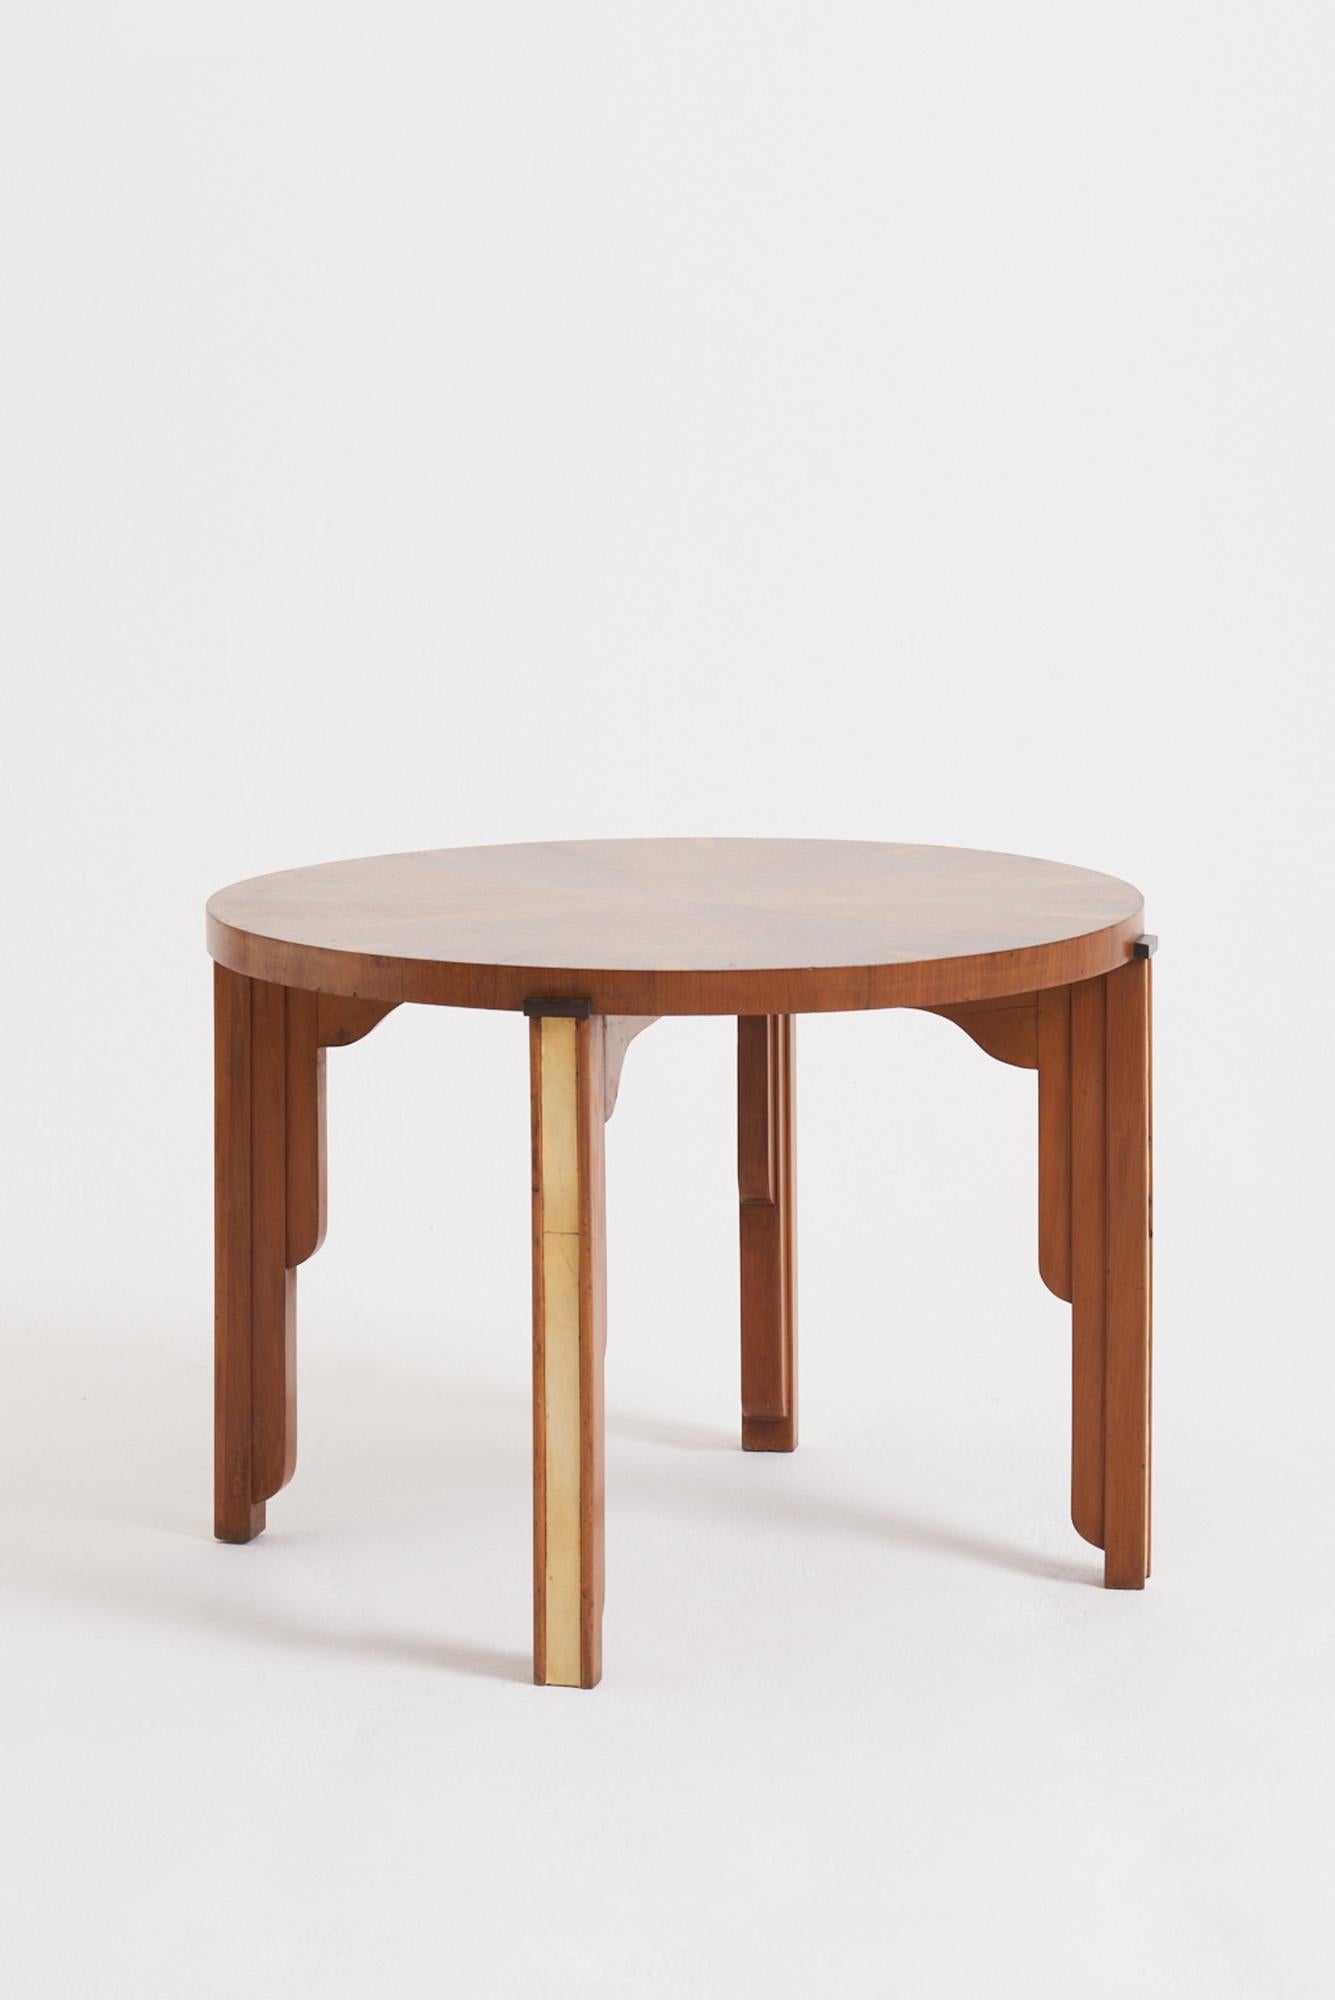 An Art Deco walnut and velum side table.
France, Circa 1930
56 cm high by 80 cm diameter